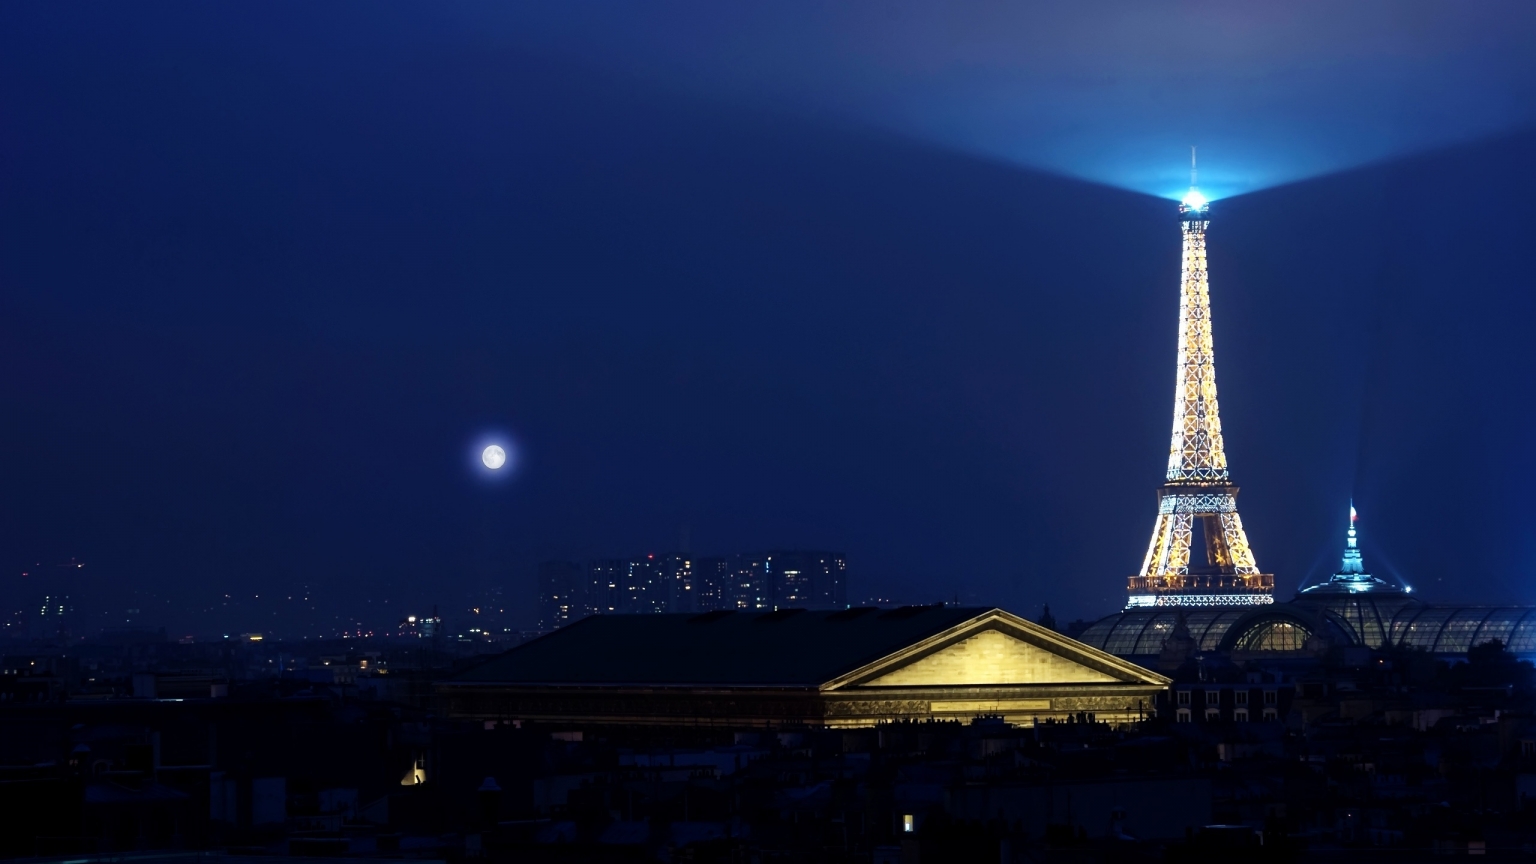 Eiffel Tower Light for 1536 x 864 HDTV resolution